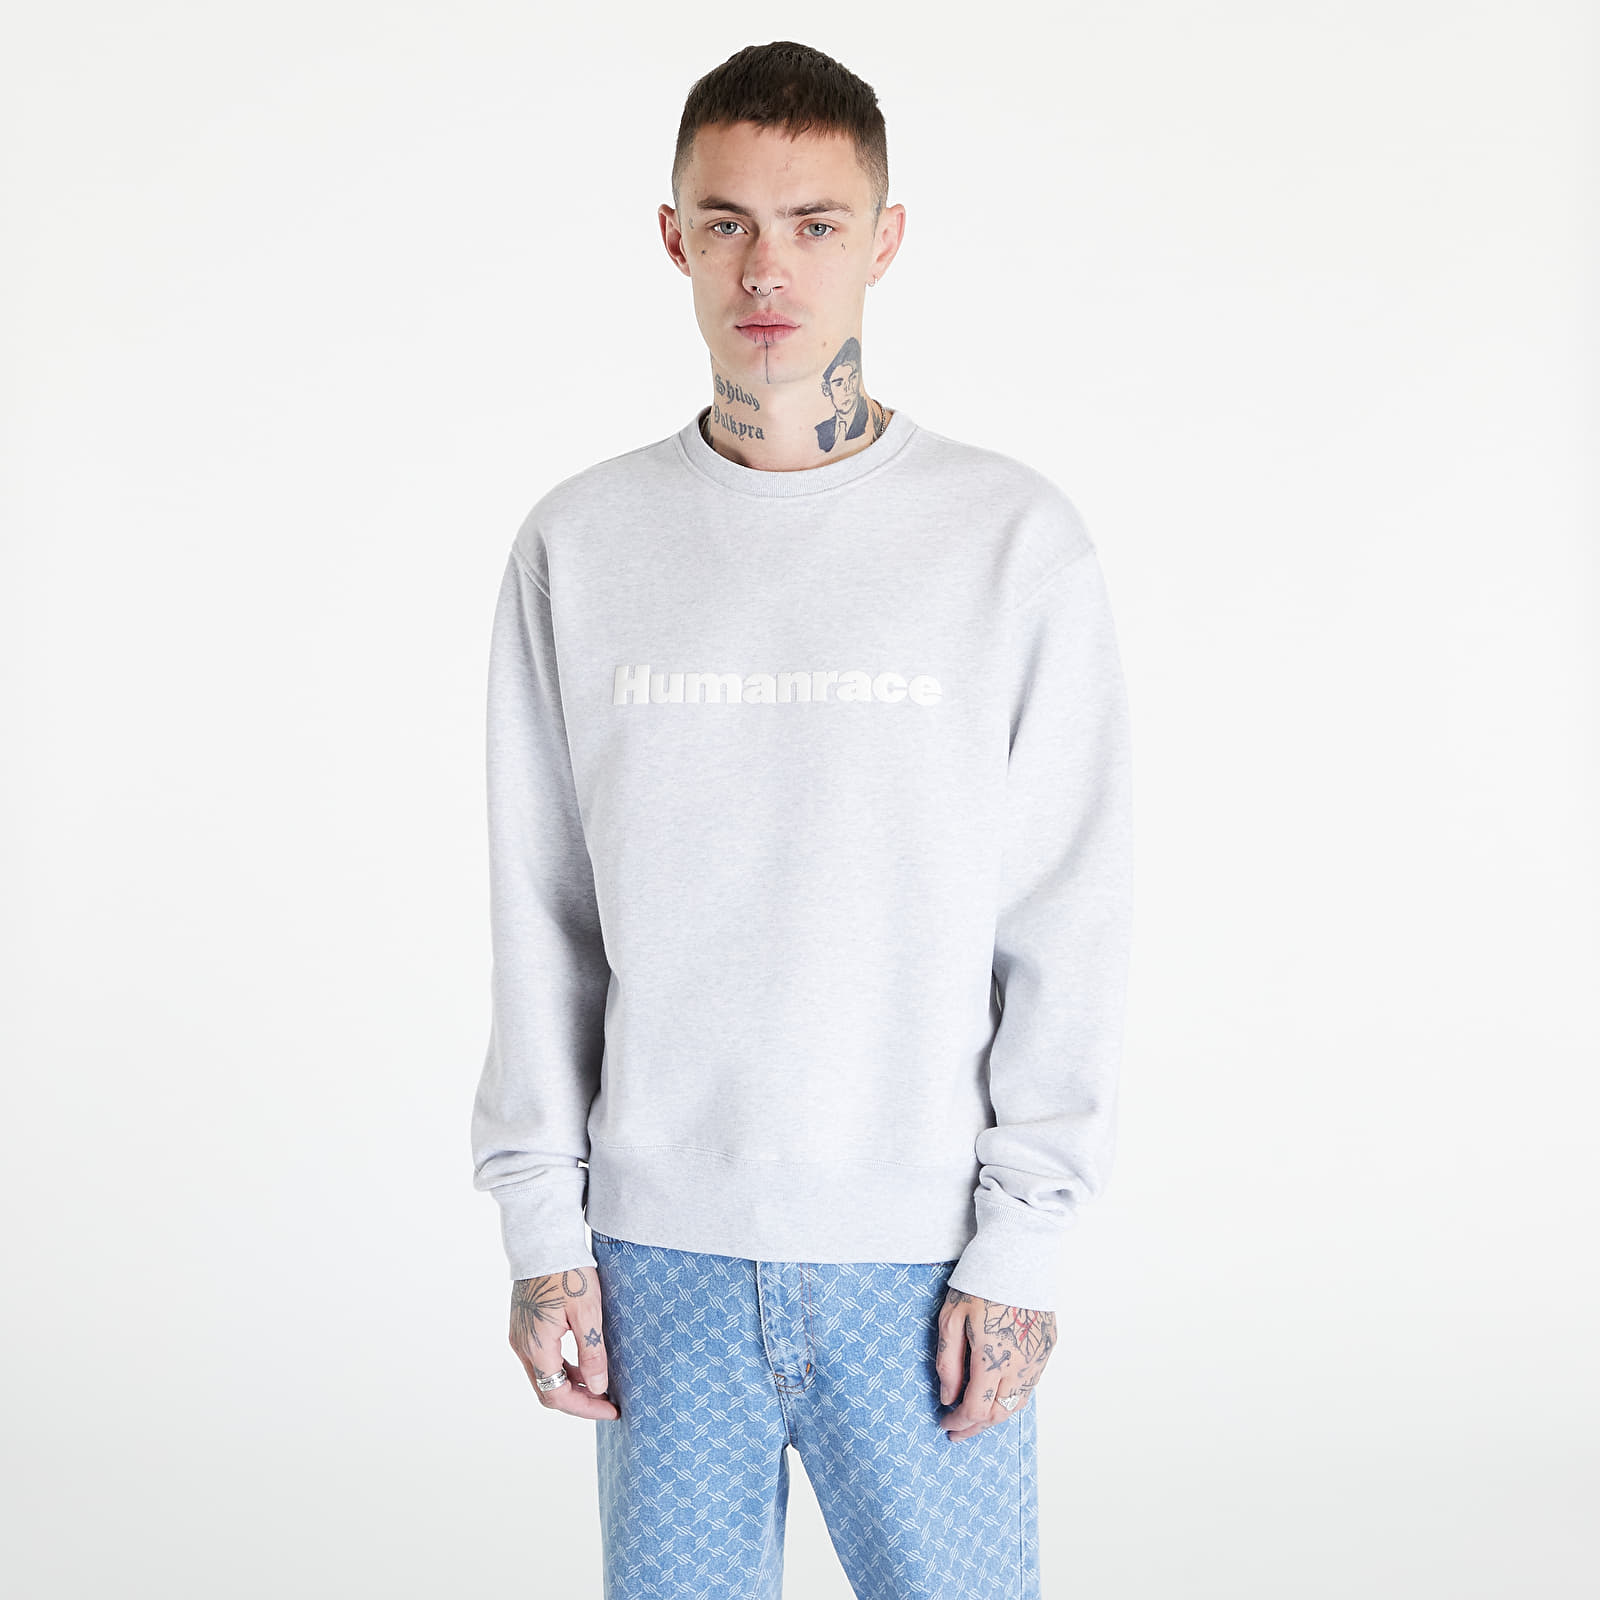 Dukserice adidas Originals Pharrell Williams Basics Crew Sweatshirt (Gender Neutral) Light Grey Heather